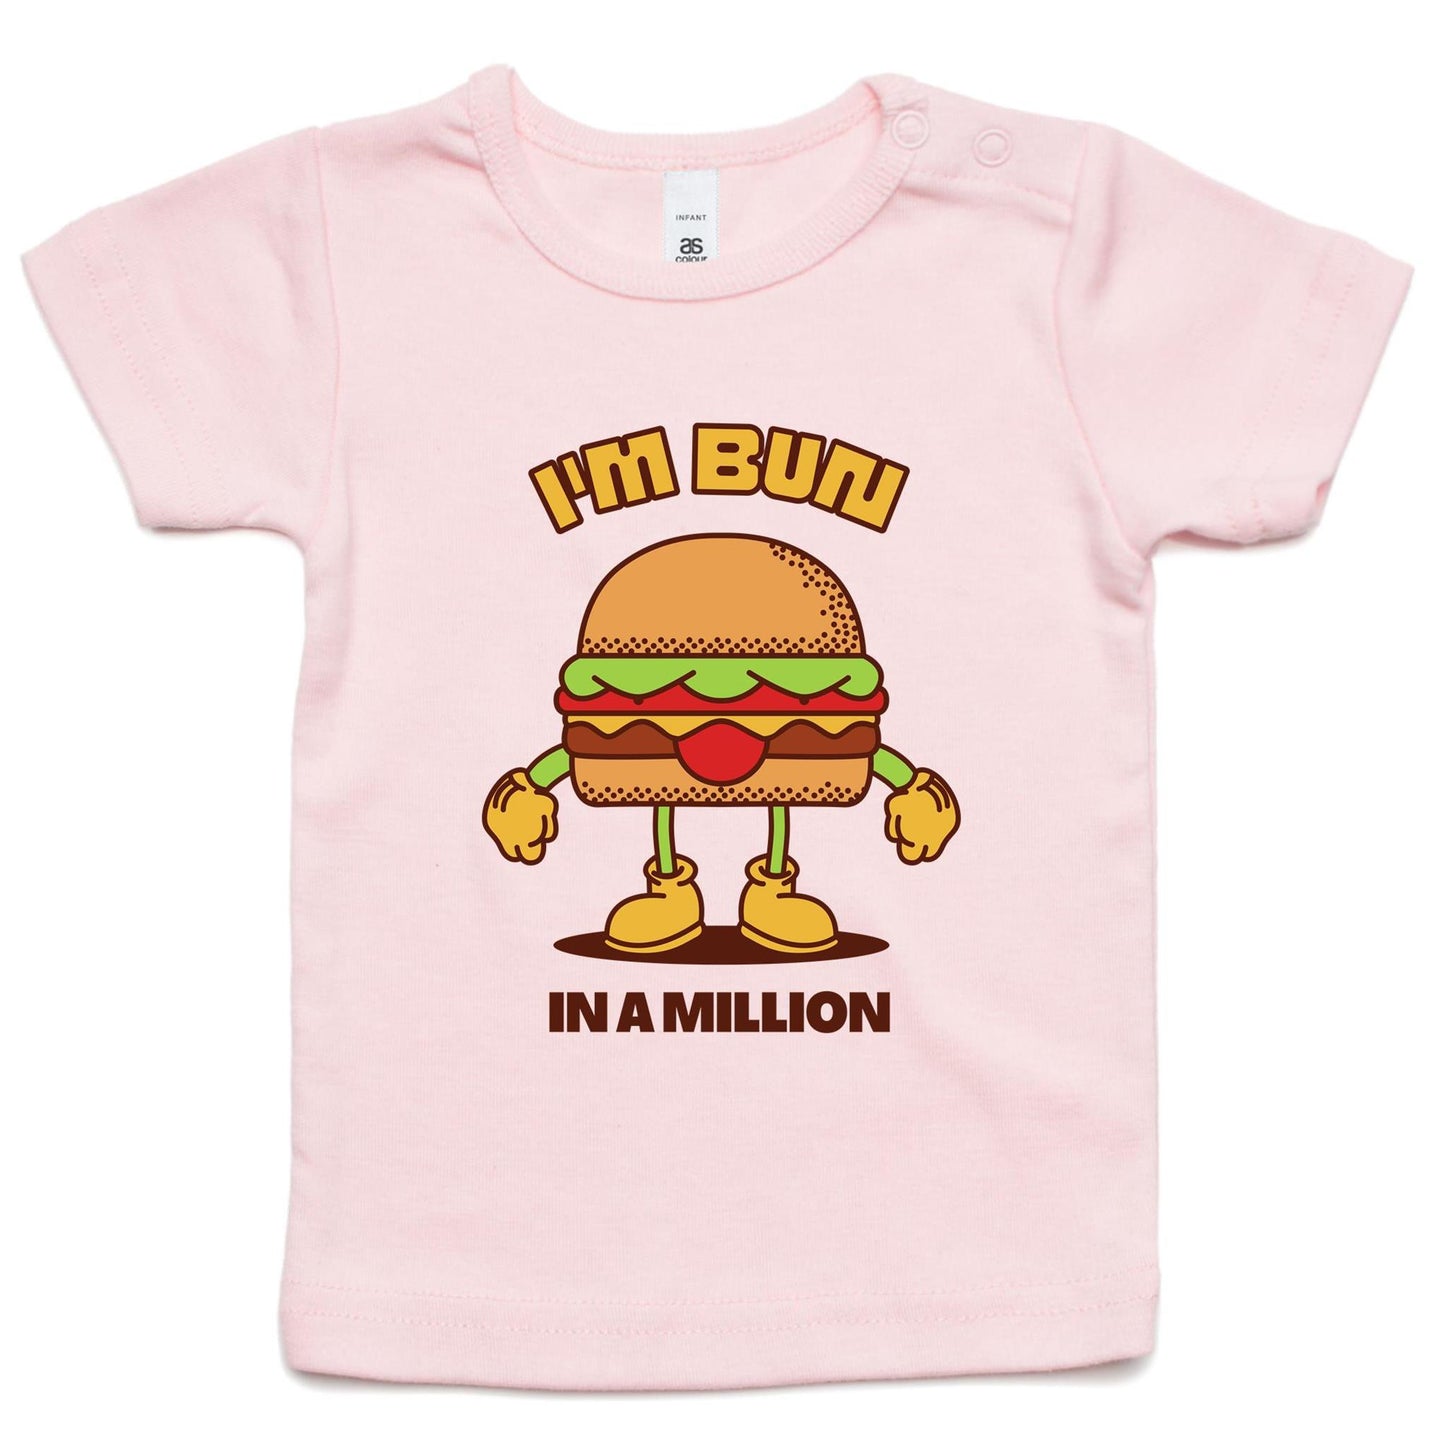 I'm Bun In A Million - Baby T-shirt Pink Baby T-shirt